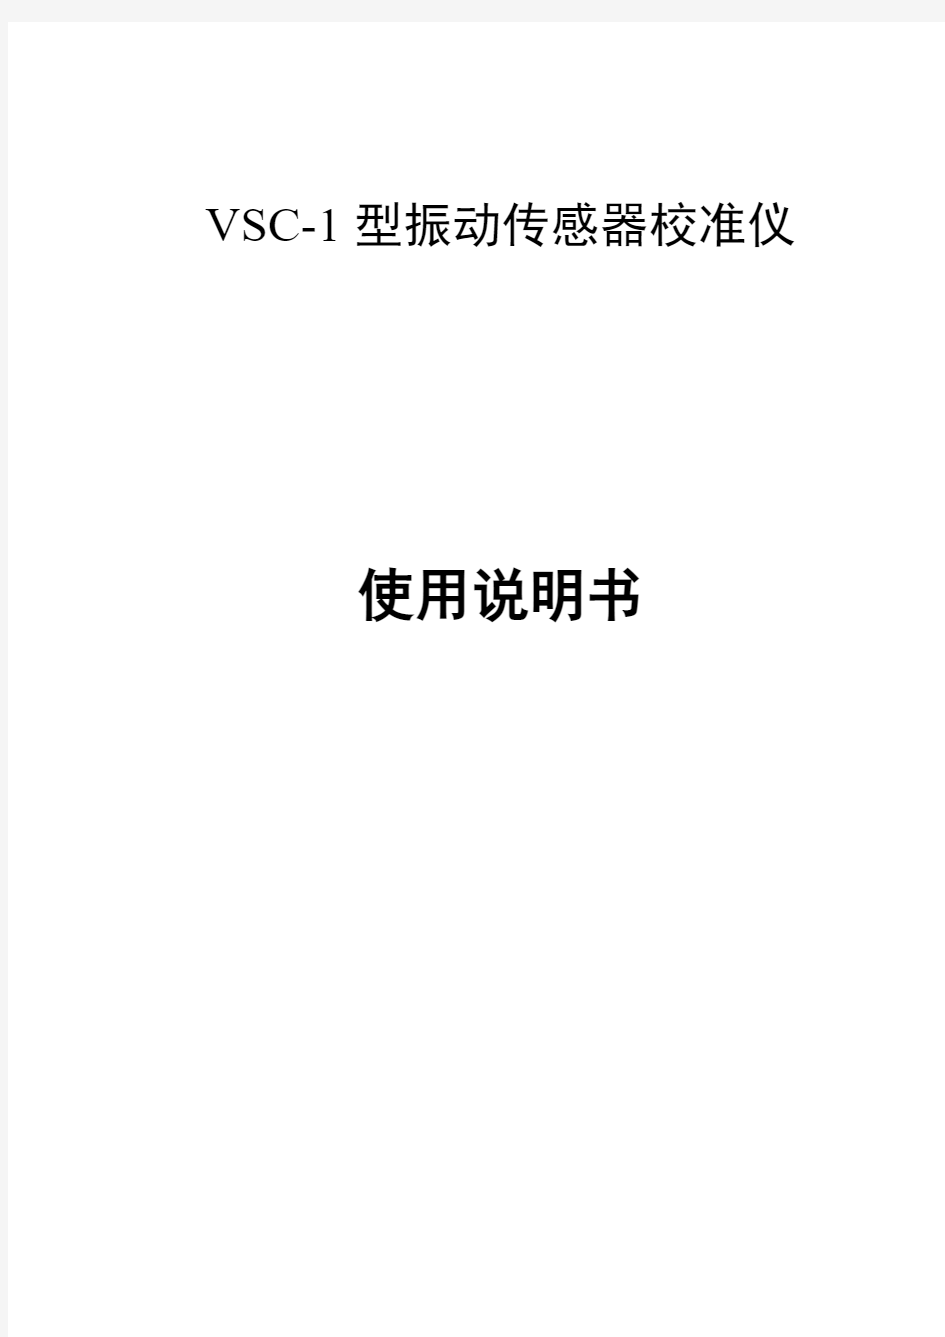 VSC-1型振动传感器校准仪使用说明书